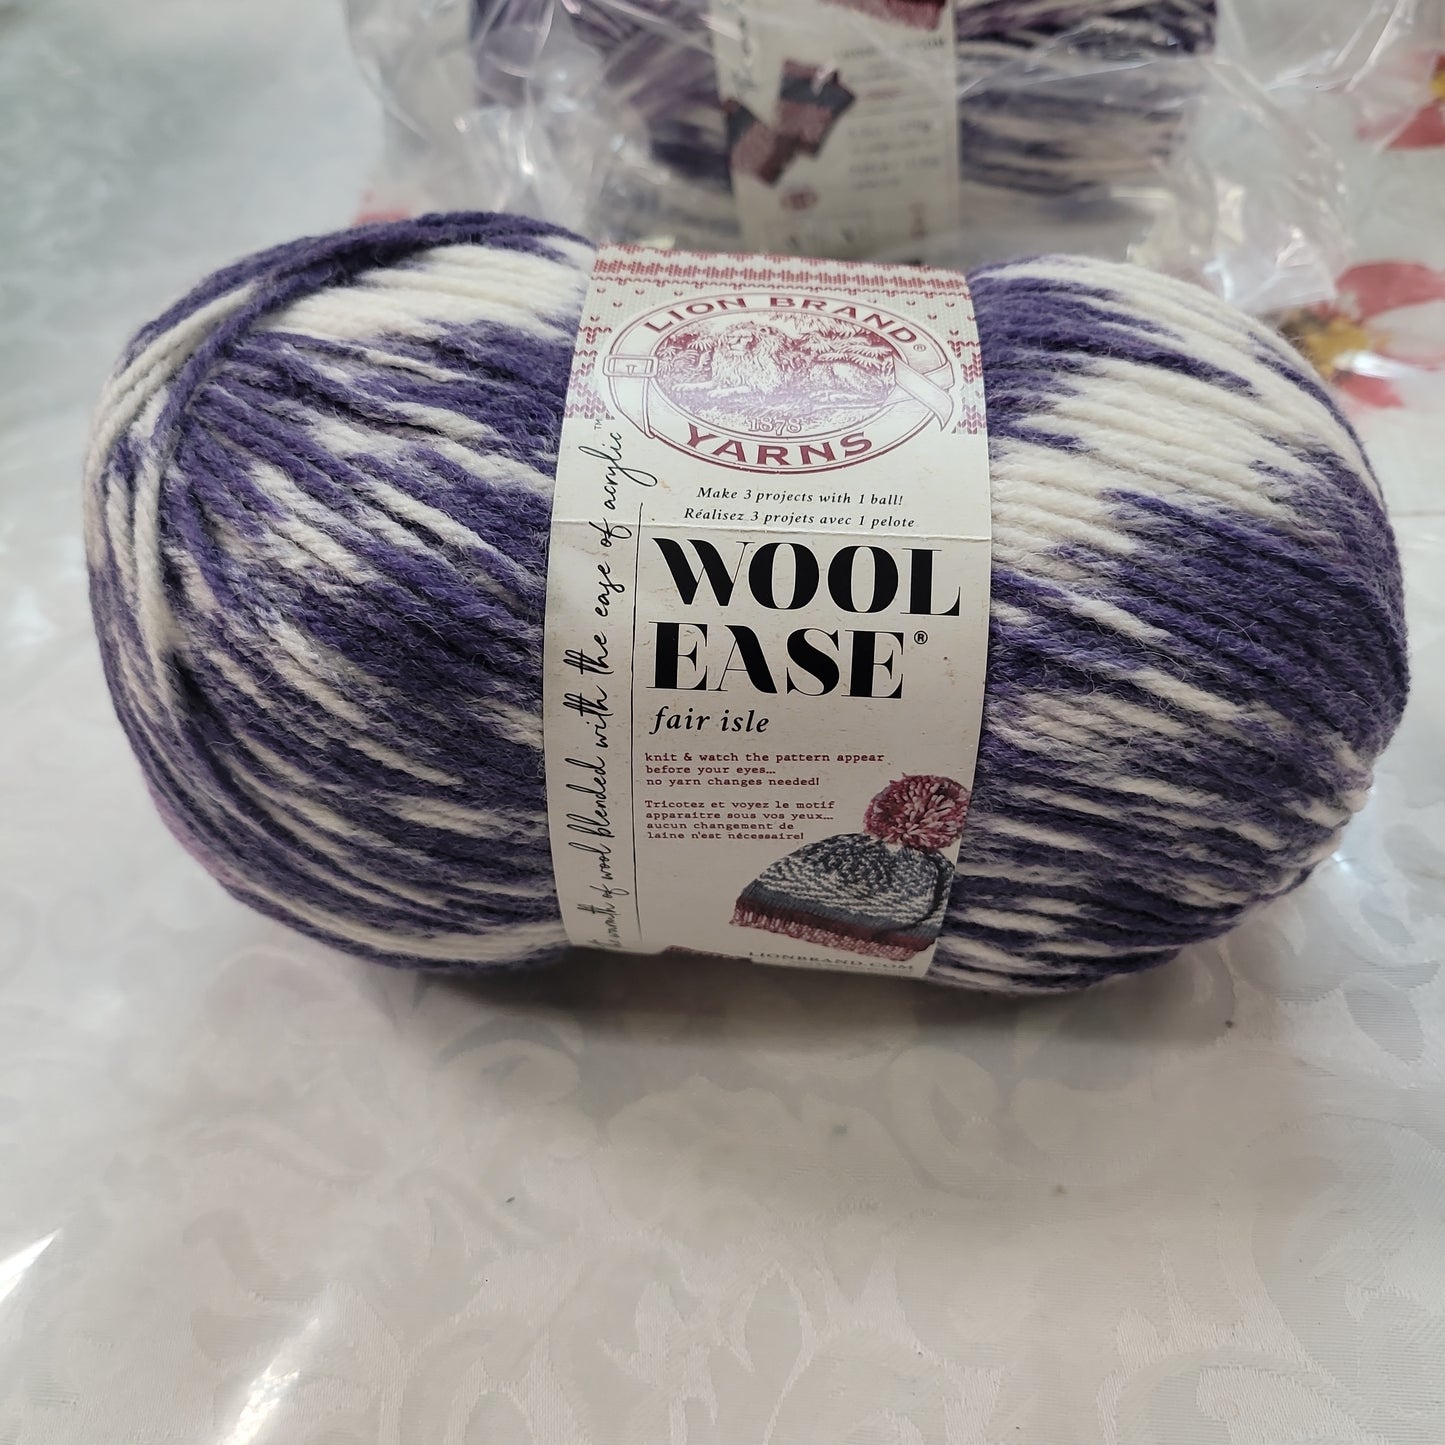 Wool Ease fair Isle